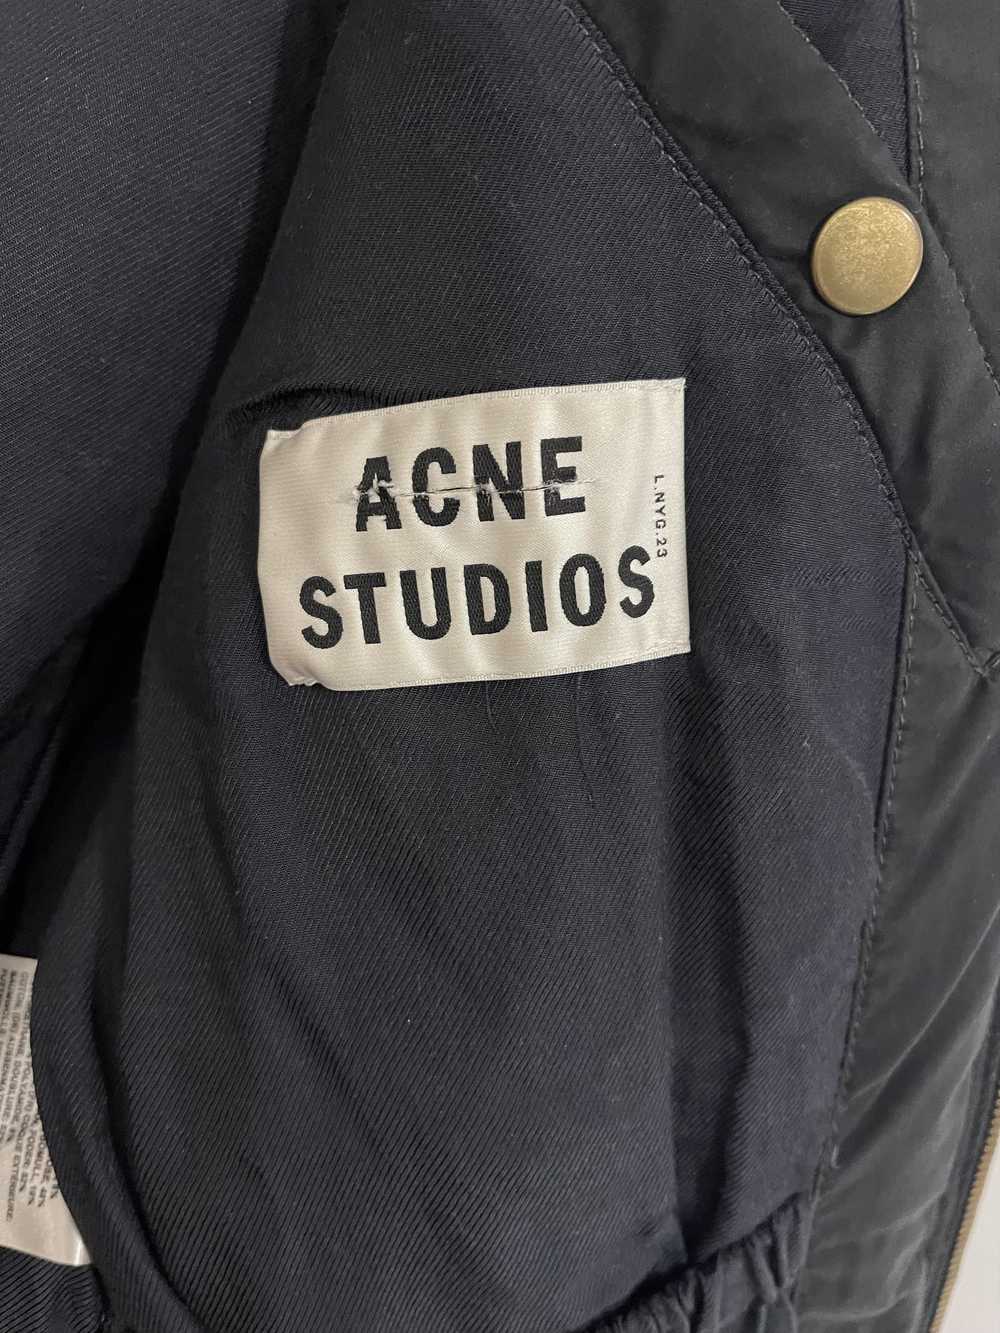 Acne Studios SID BOMBER A/W 13 - image 10